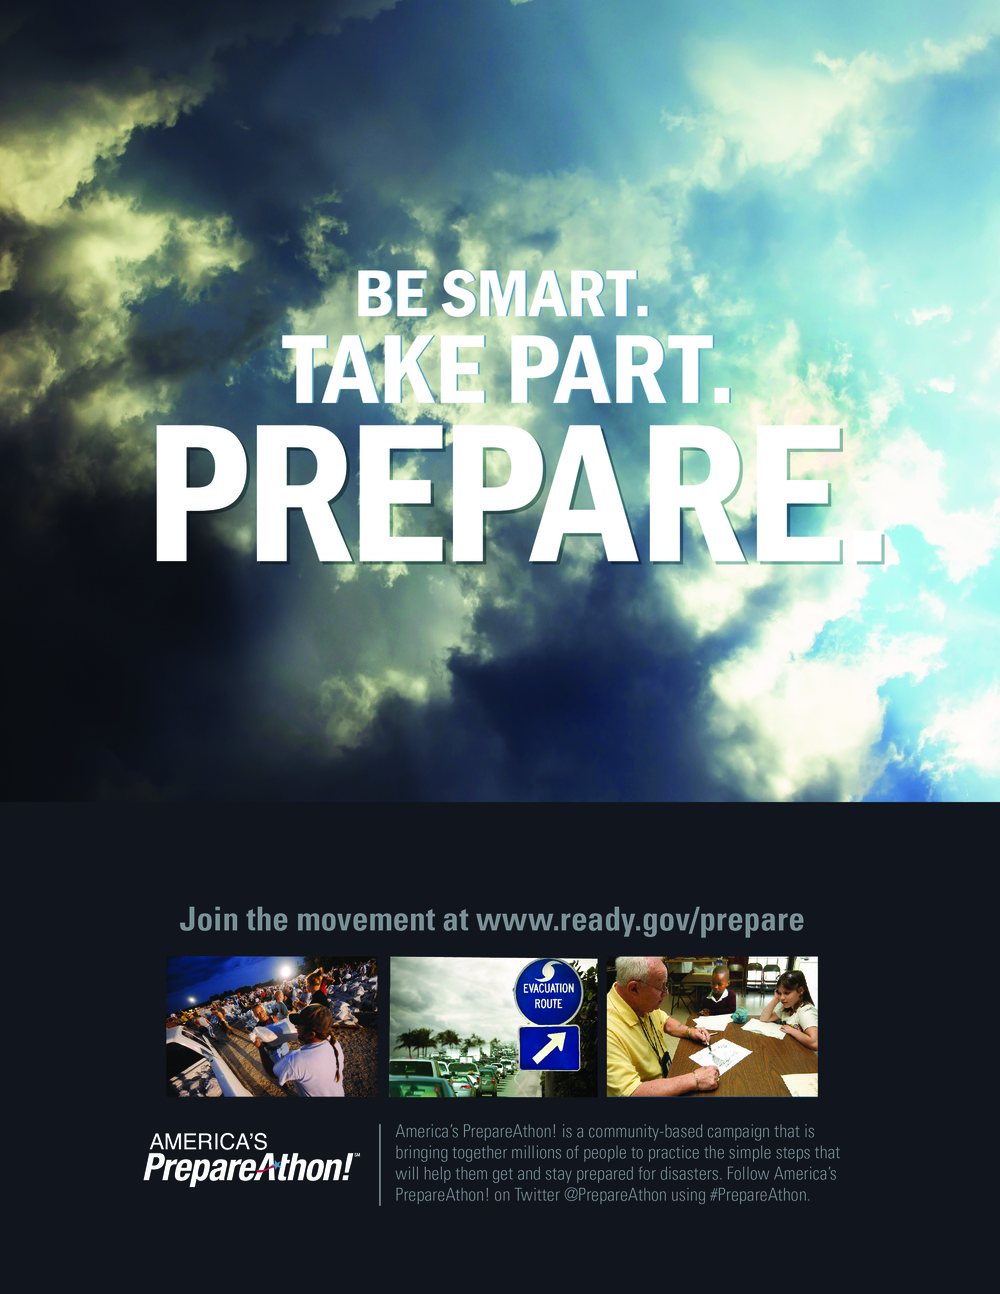 Be smart, take part, prepare